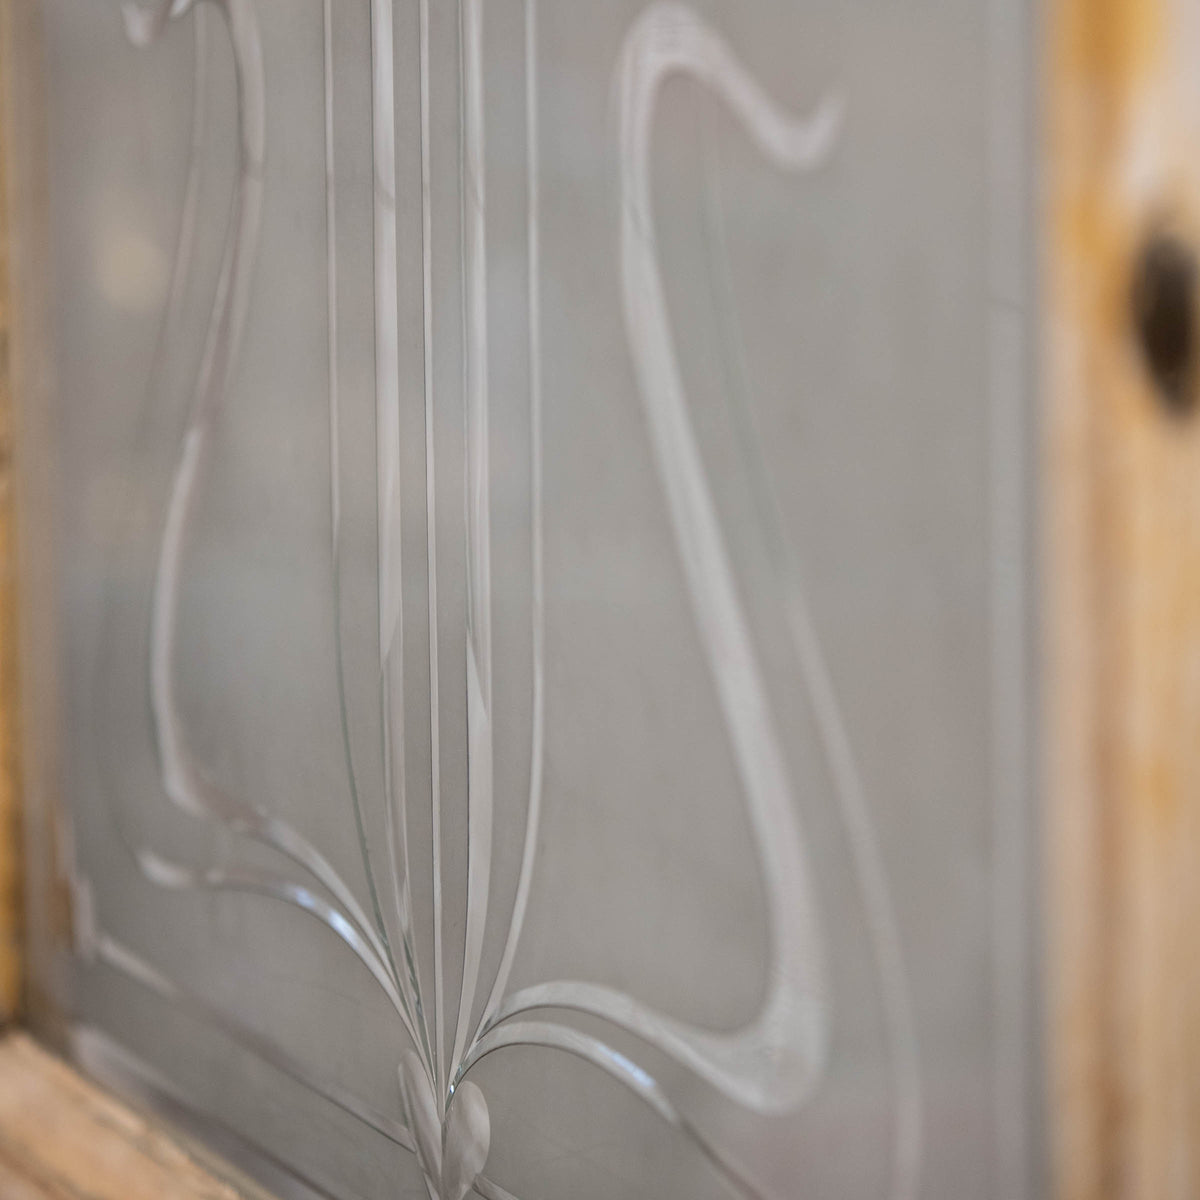 Antique Art Nouveau frosted etched glass front door | The Architectural Forum